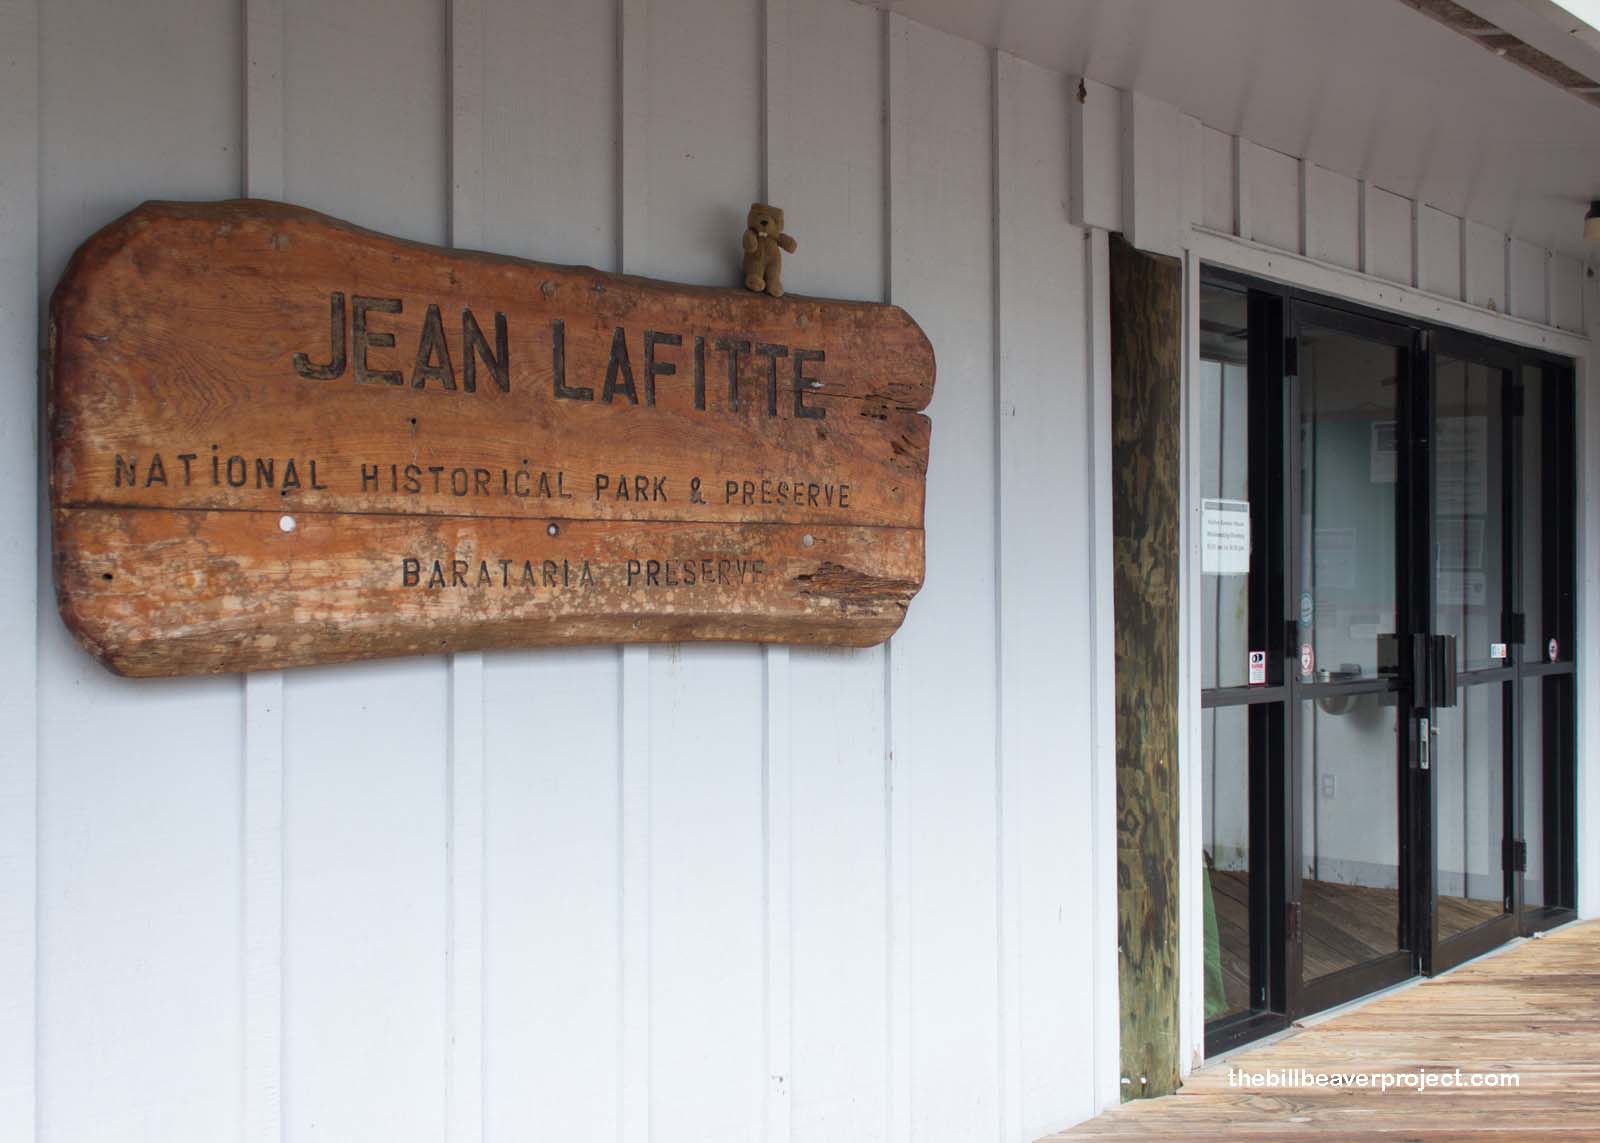 Jean Lafitte National Historic Park & Preserve